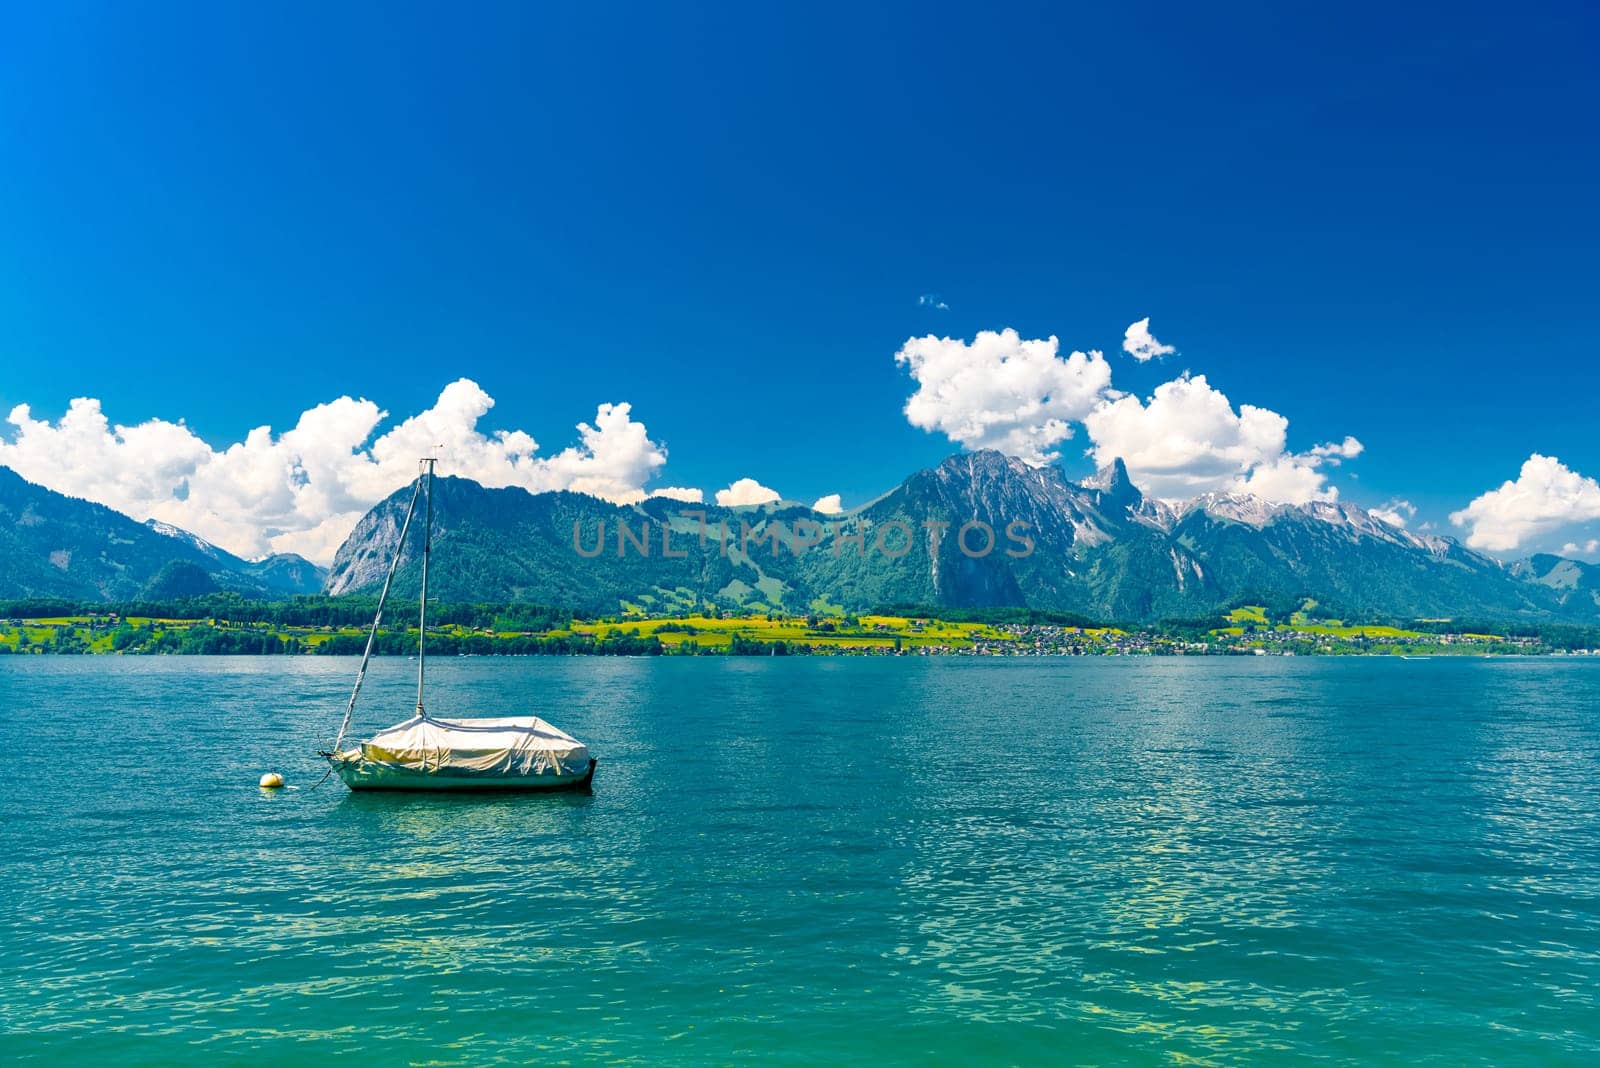 Boats and mountains on the Lake Thun, Thunersee Bern Switzerland.